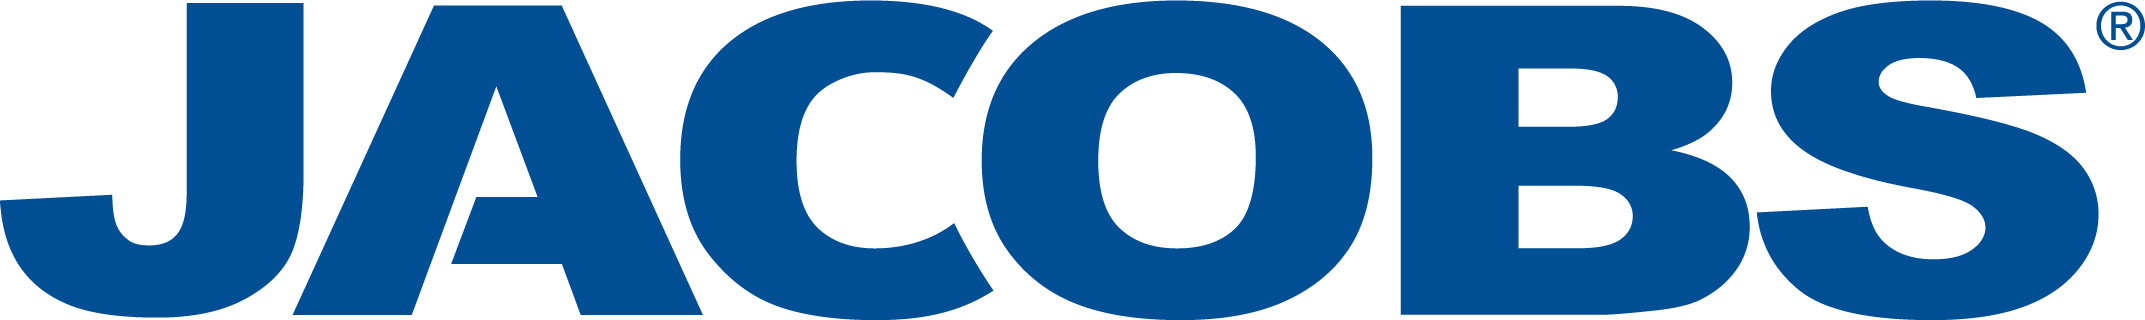 Jacobs Logo_Blue-01.png